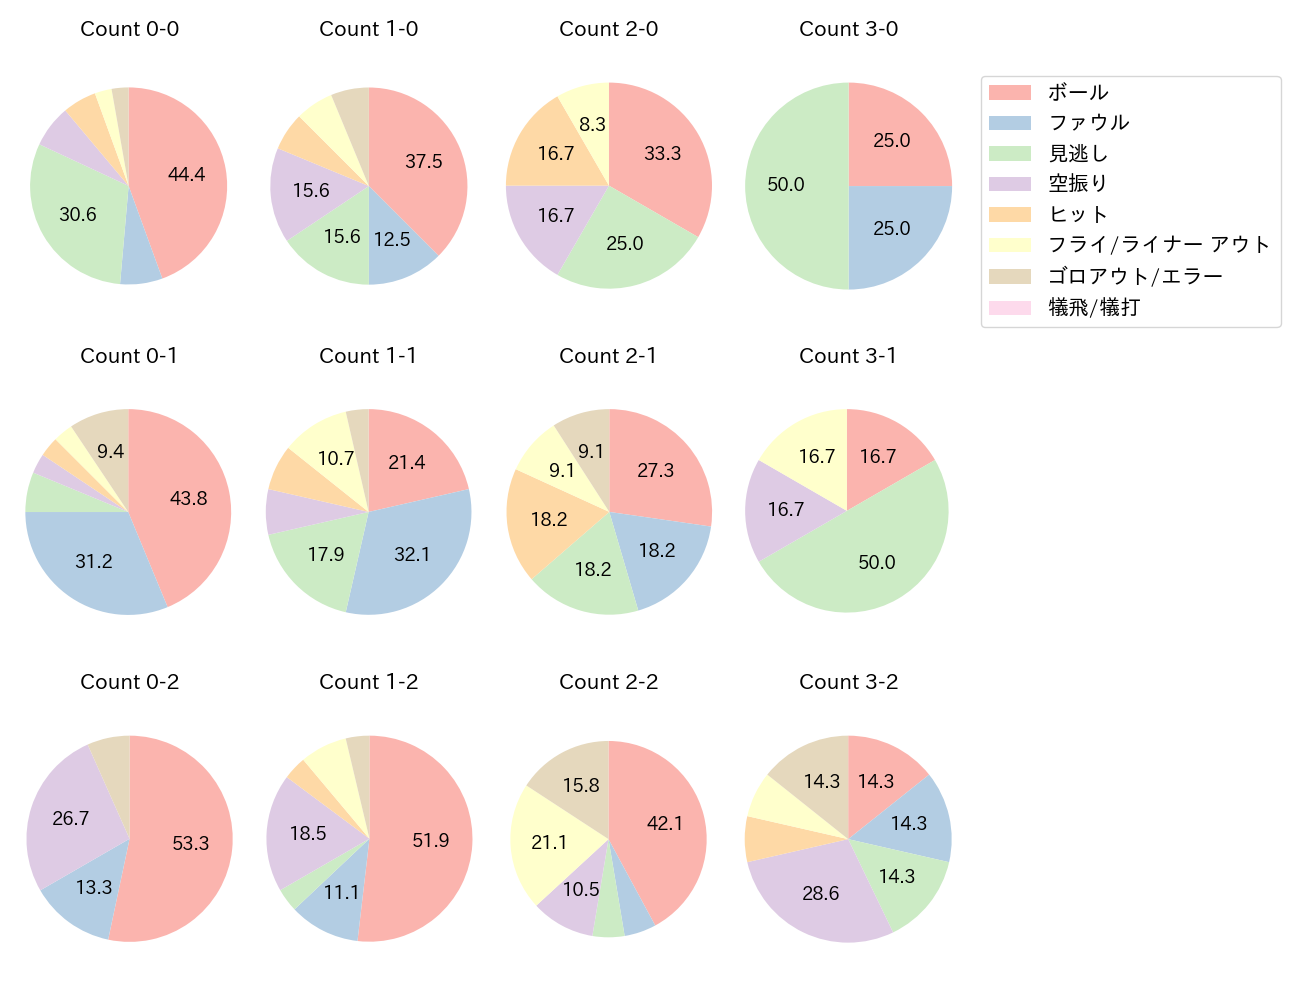 T-岡田の球数分布(2021年9月)